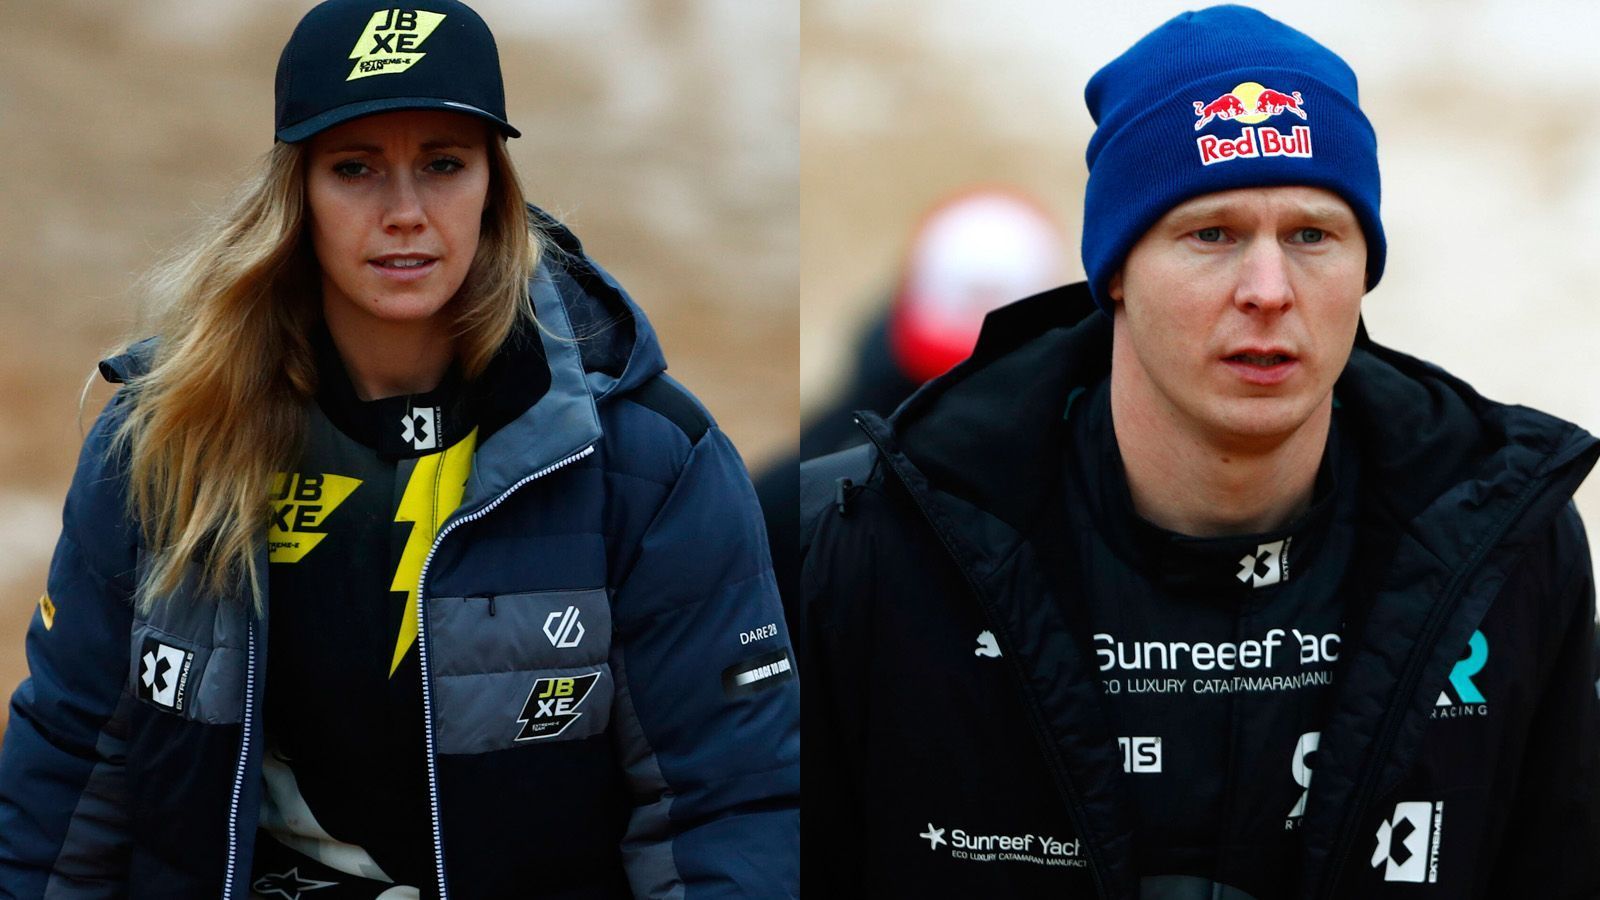 
                <strong>Rosberg X Racing (Titelverteidiger)</strong><br>
                &#x2022; Fahrer: Mikaela Ahlin-Kottulinsky (SWE) u. Johan Kristofersson (SWE) -<br>&#x2022; Team aus: Deutschland -<br>&#x2022; Gründer: Nico Rosberg<br>
              